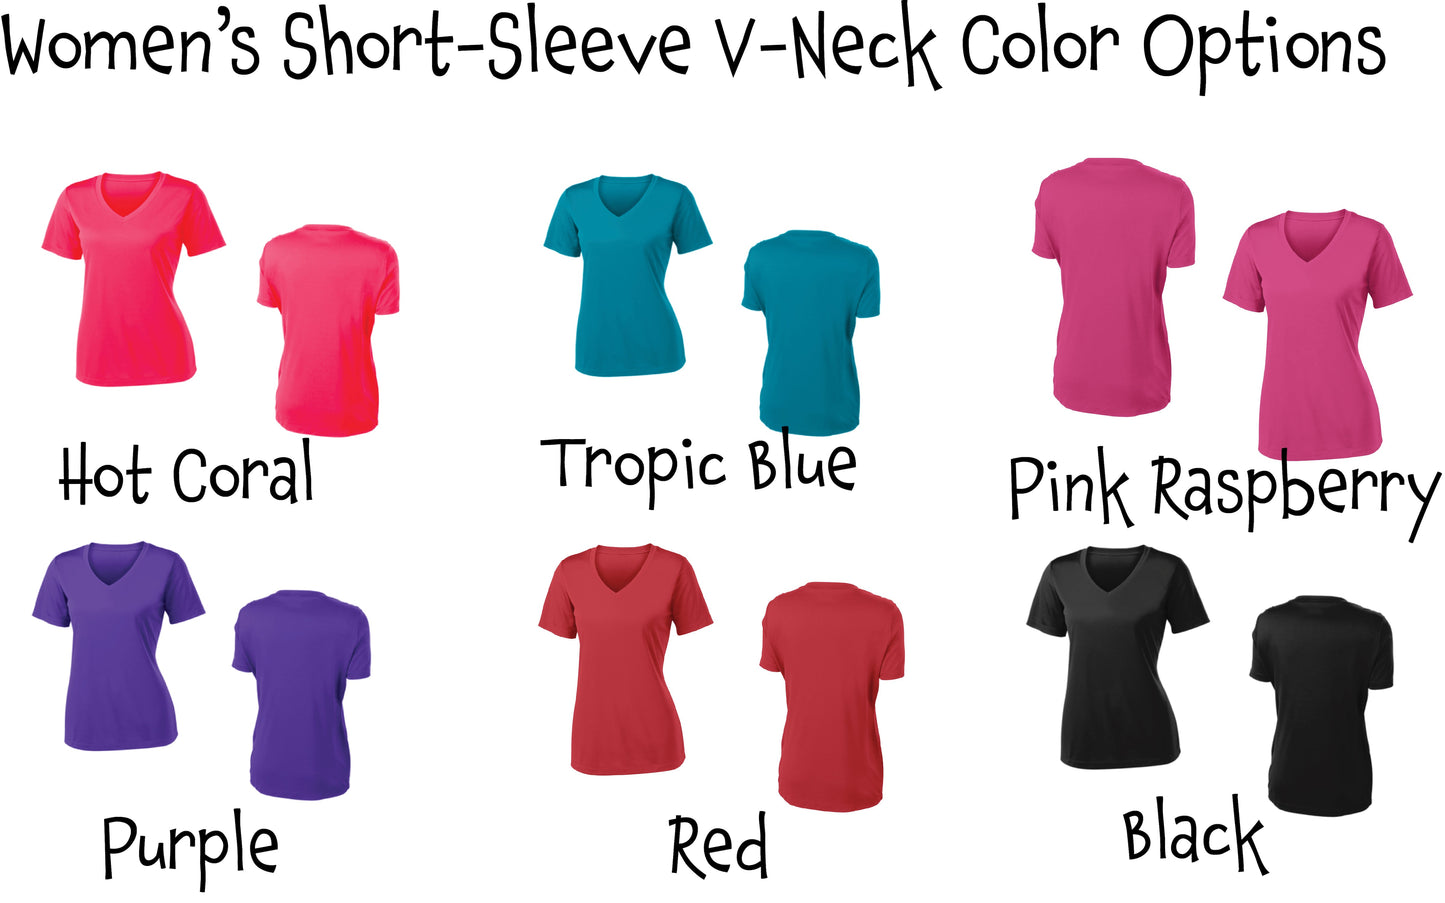 Dink Responsibly Don't Get Smashed | Women's Short Sleeve V-Neck Pickleball Shirts | 100% Polyester